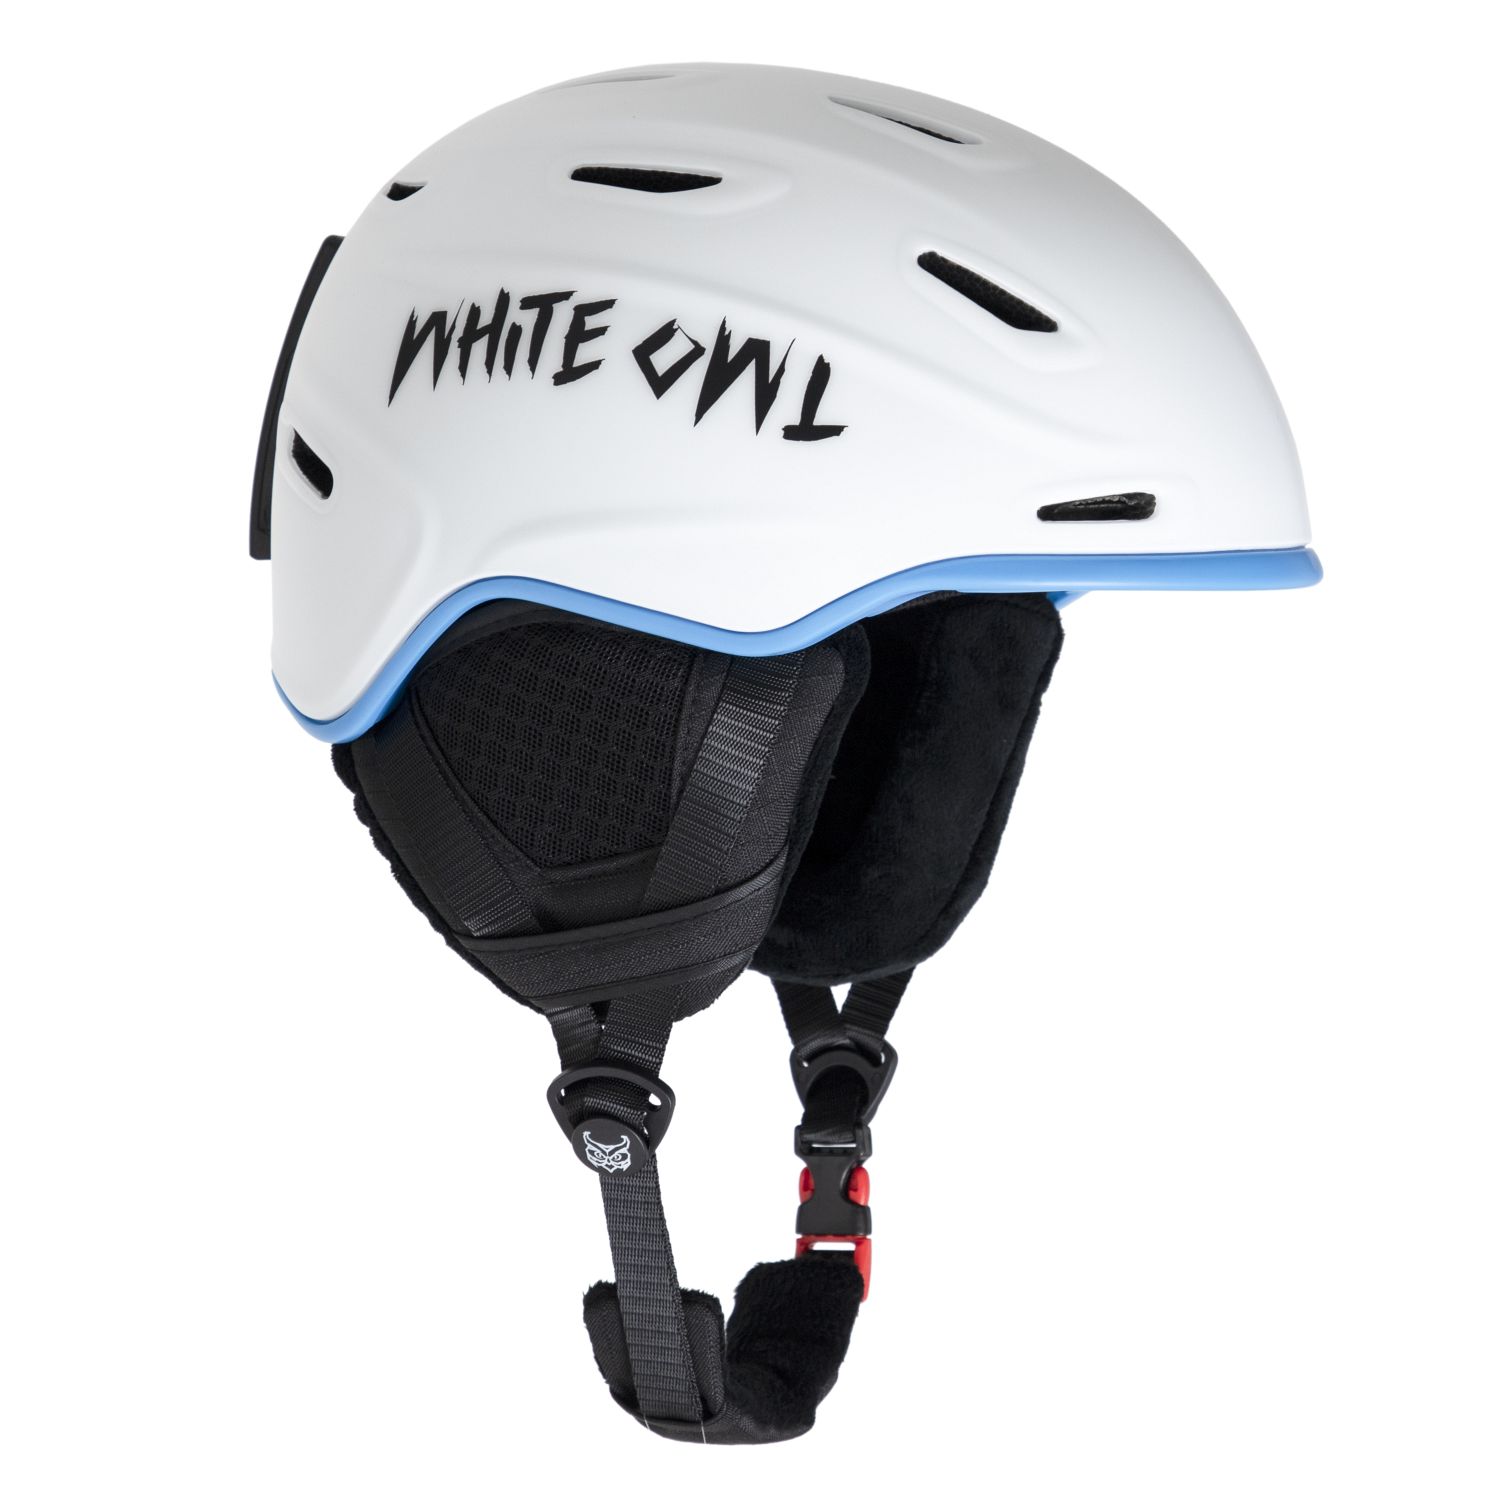 Шлем зимний White Owl HK004, M (54-58 см), белый с синим